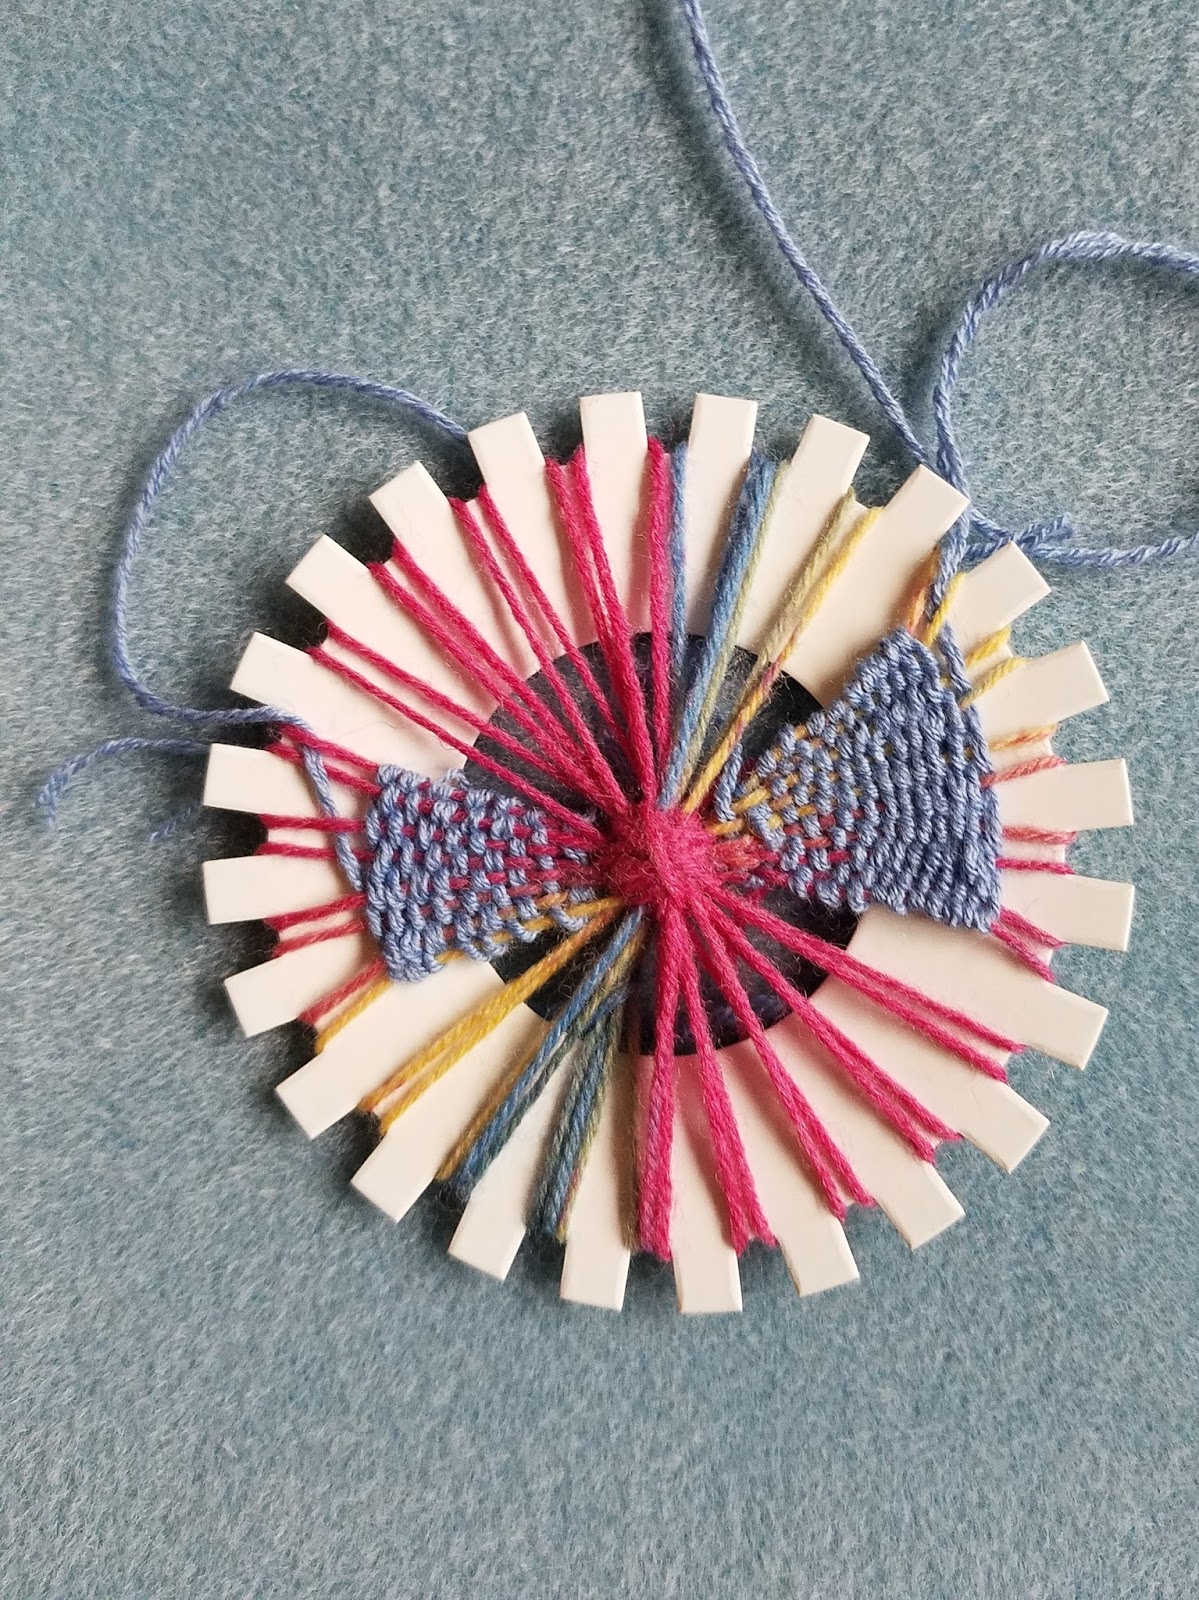 Craftyism - Review Crochet Loom Blooms by Haafner Linssen